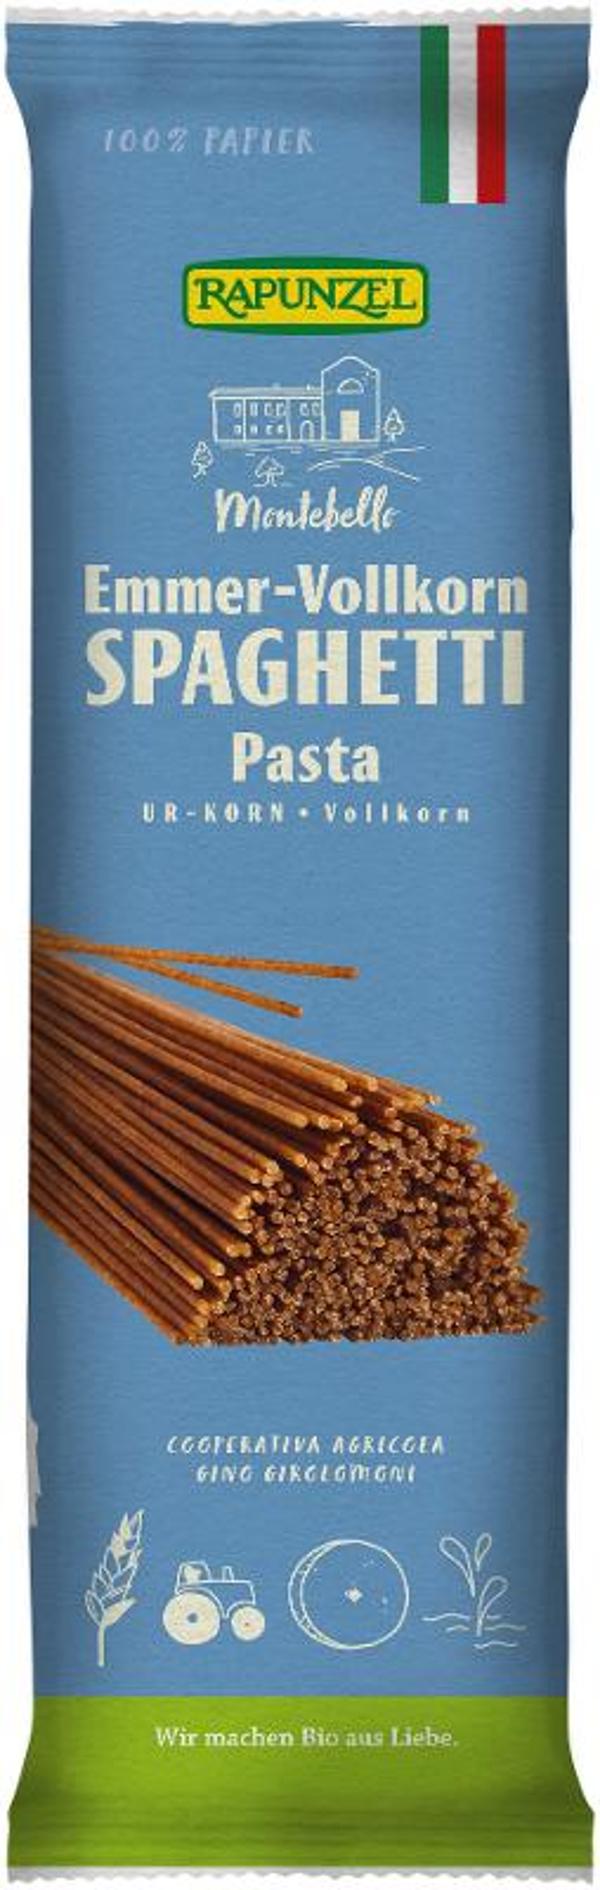 Produktfoto zu Emmer-Spaghetti Vollkorn, 500 g